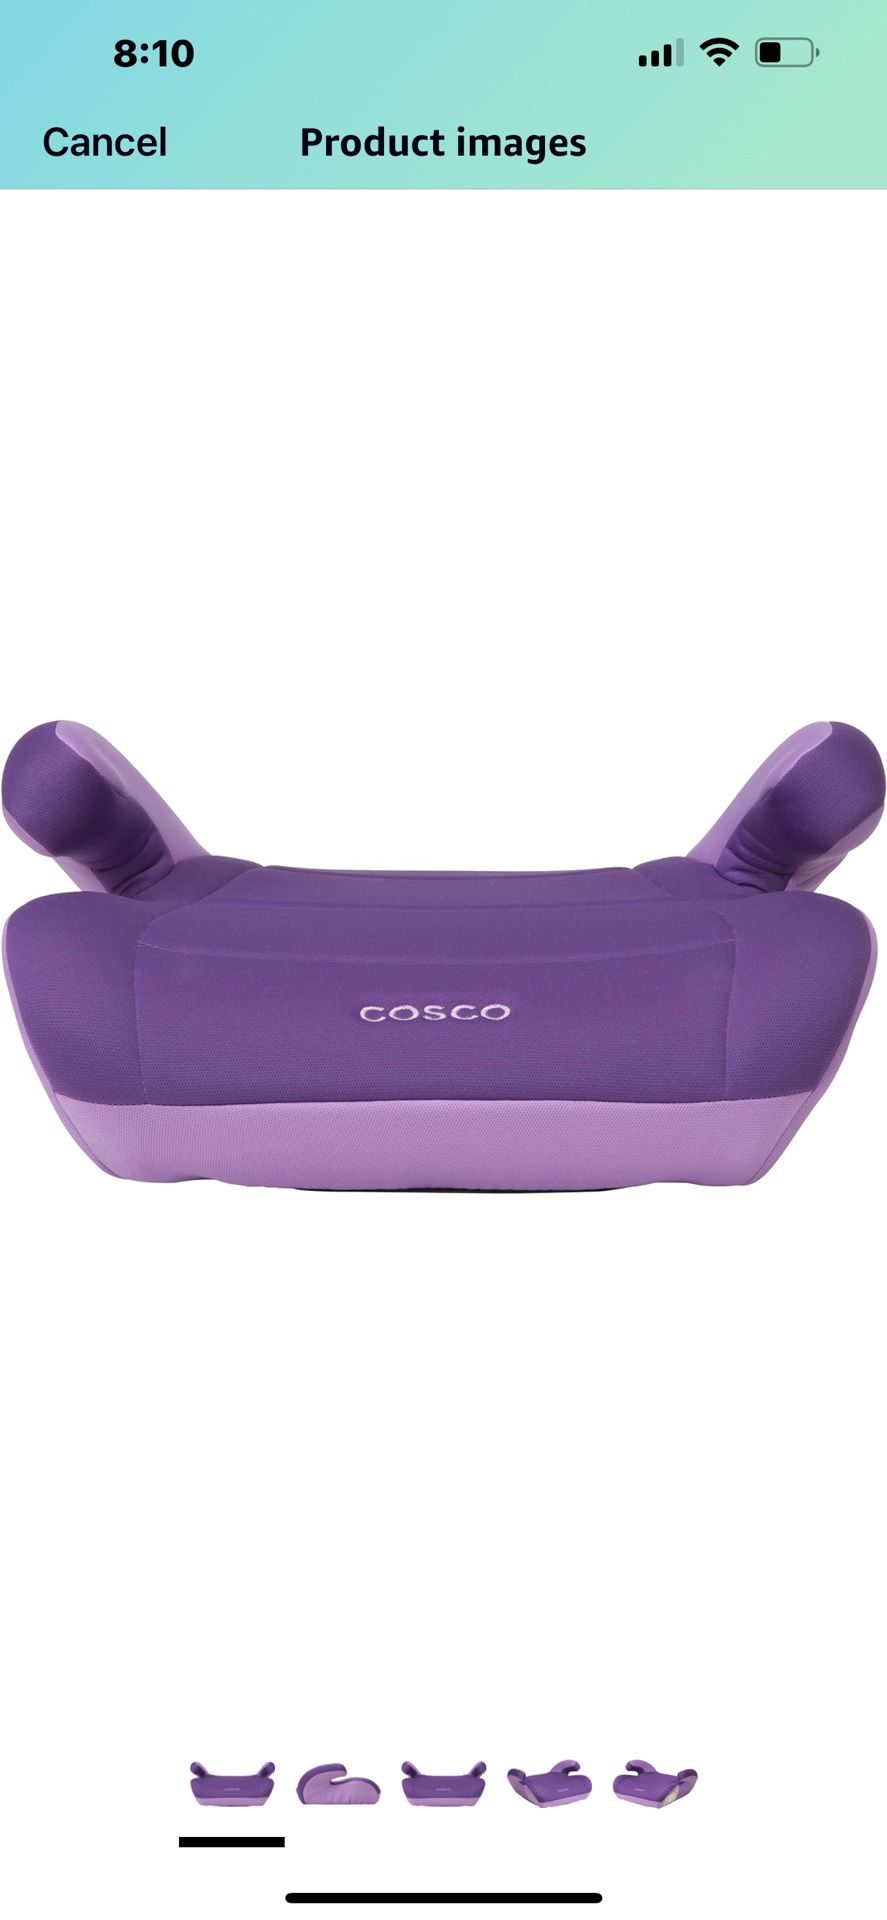 Cosco Topside Booster Car Seat - Grape